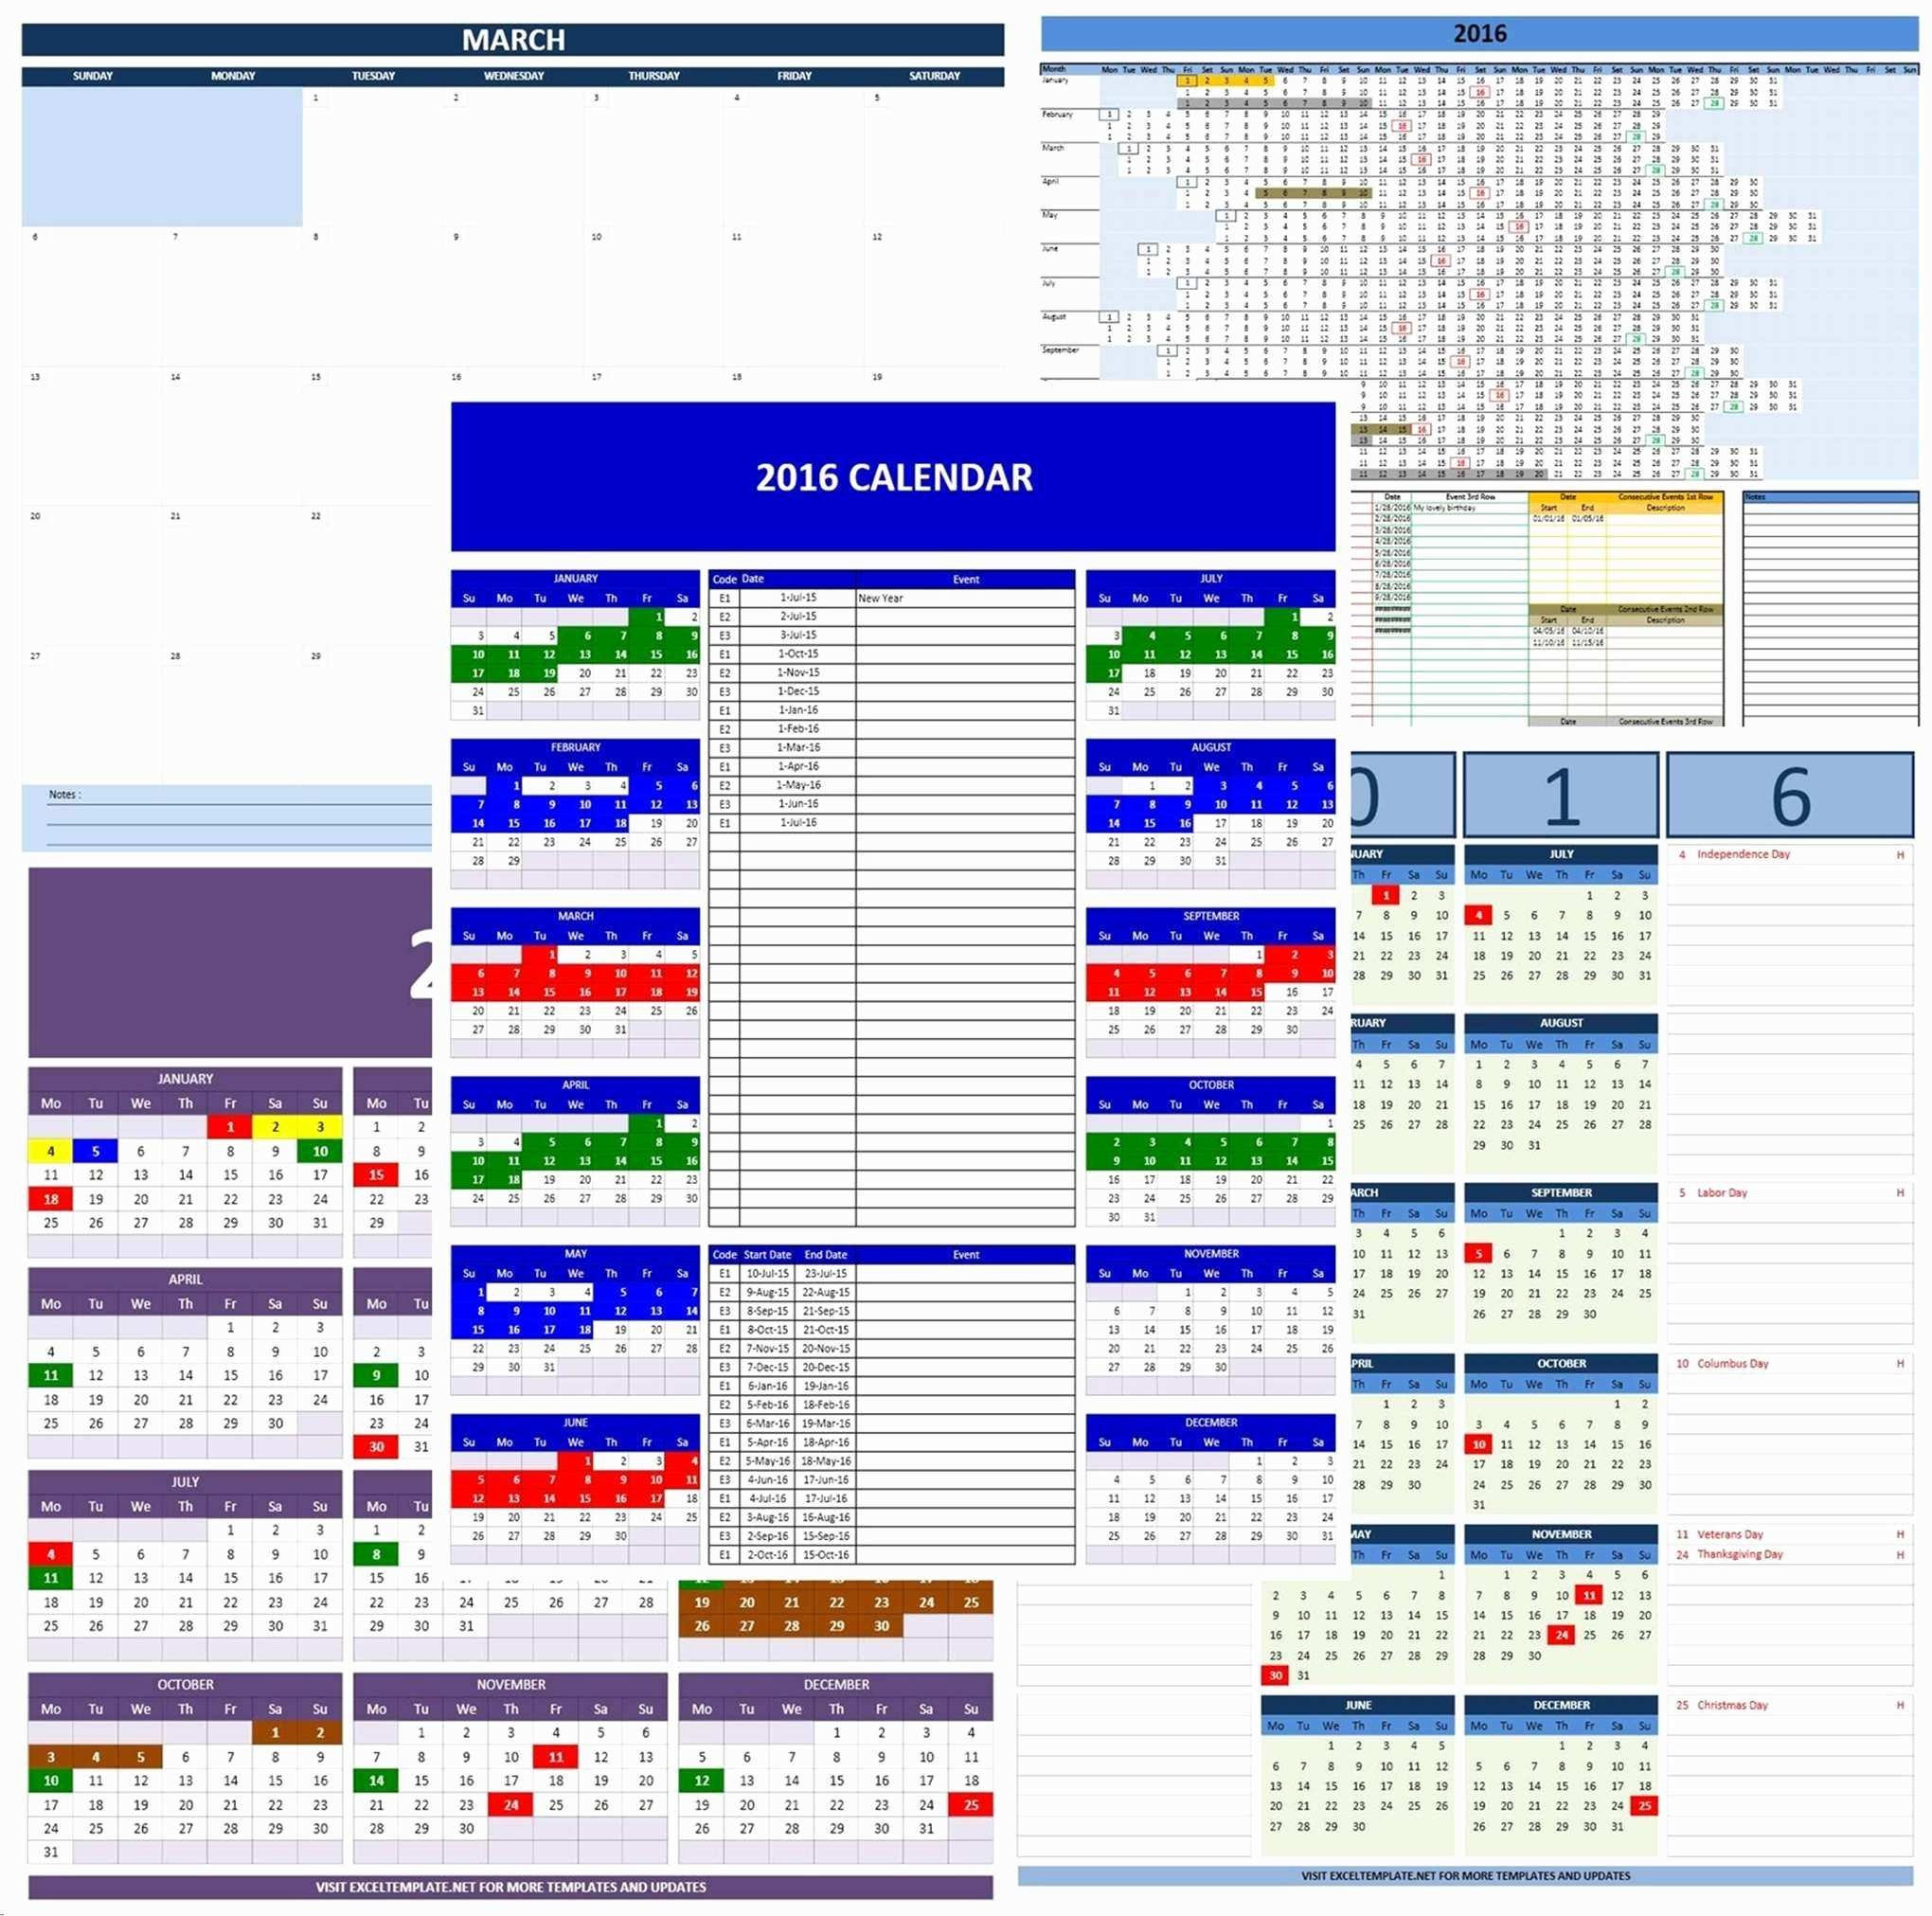 Microsoft Excel Gantt Chart Template Free Download Construction inside Microsoft Excel Gantt Chart Template Free Download